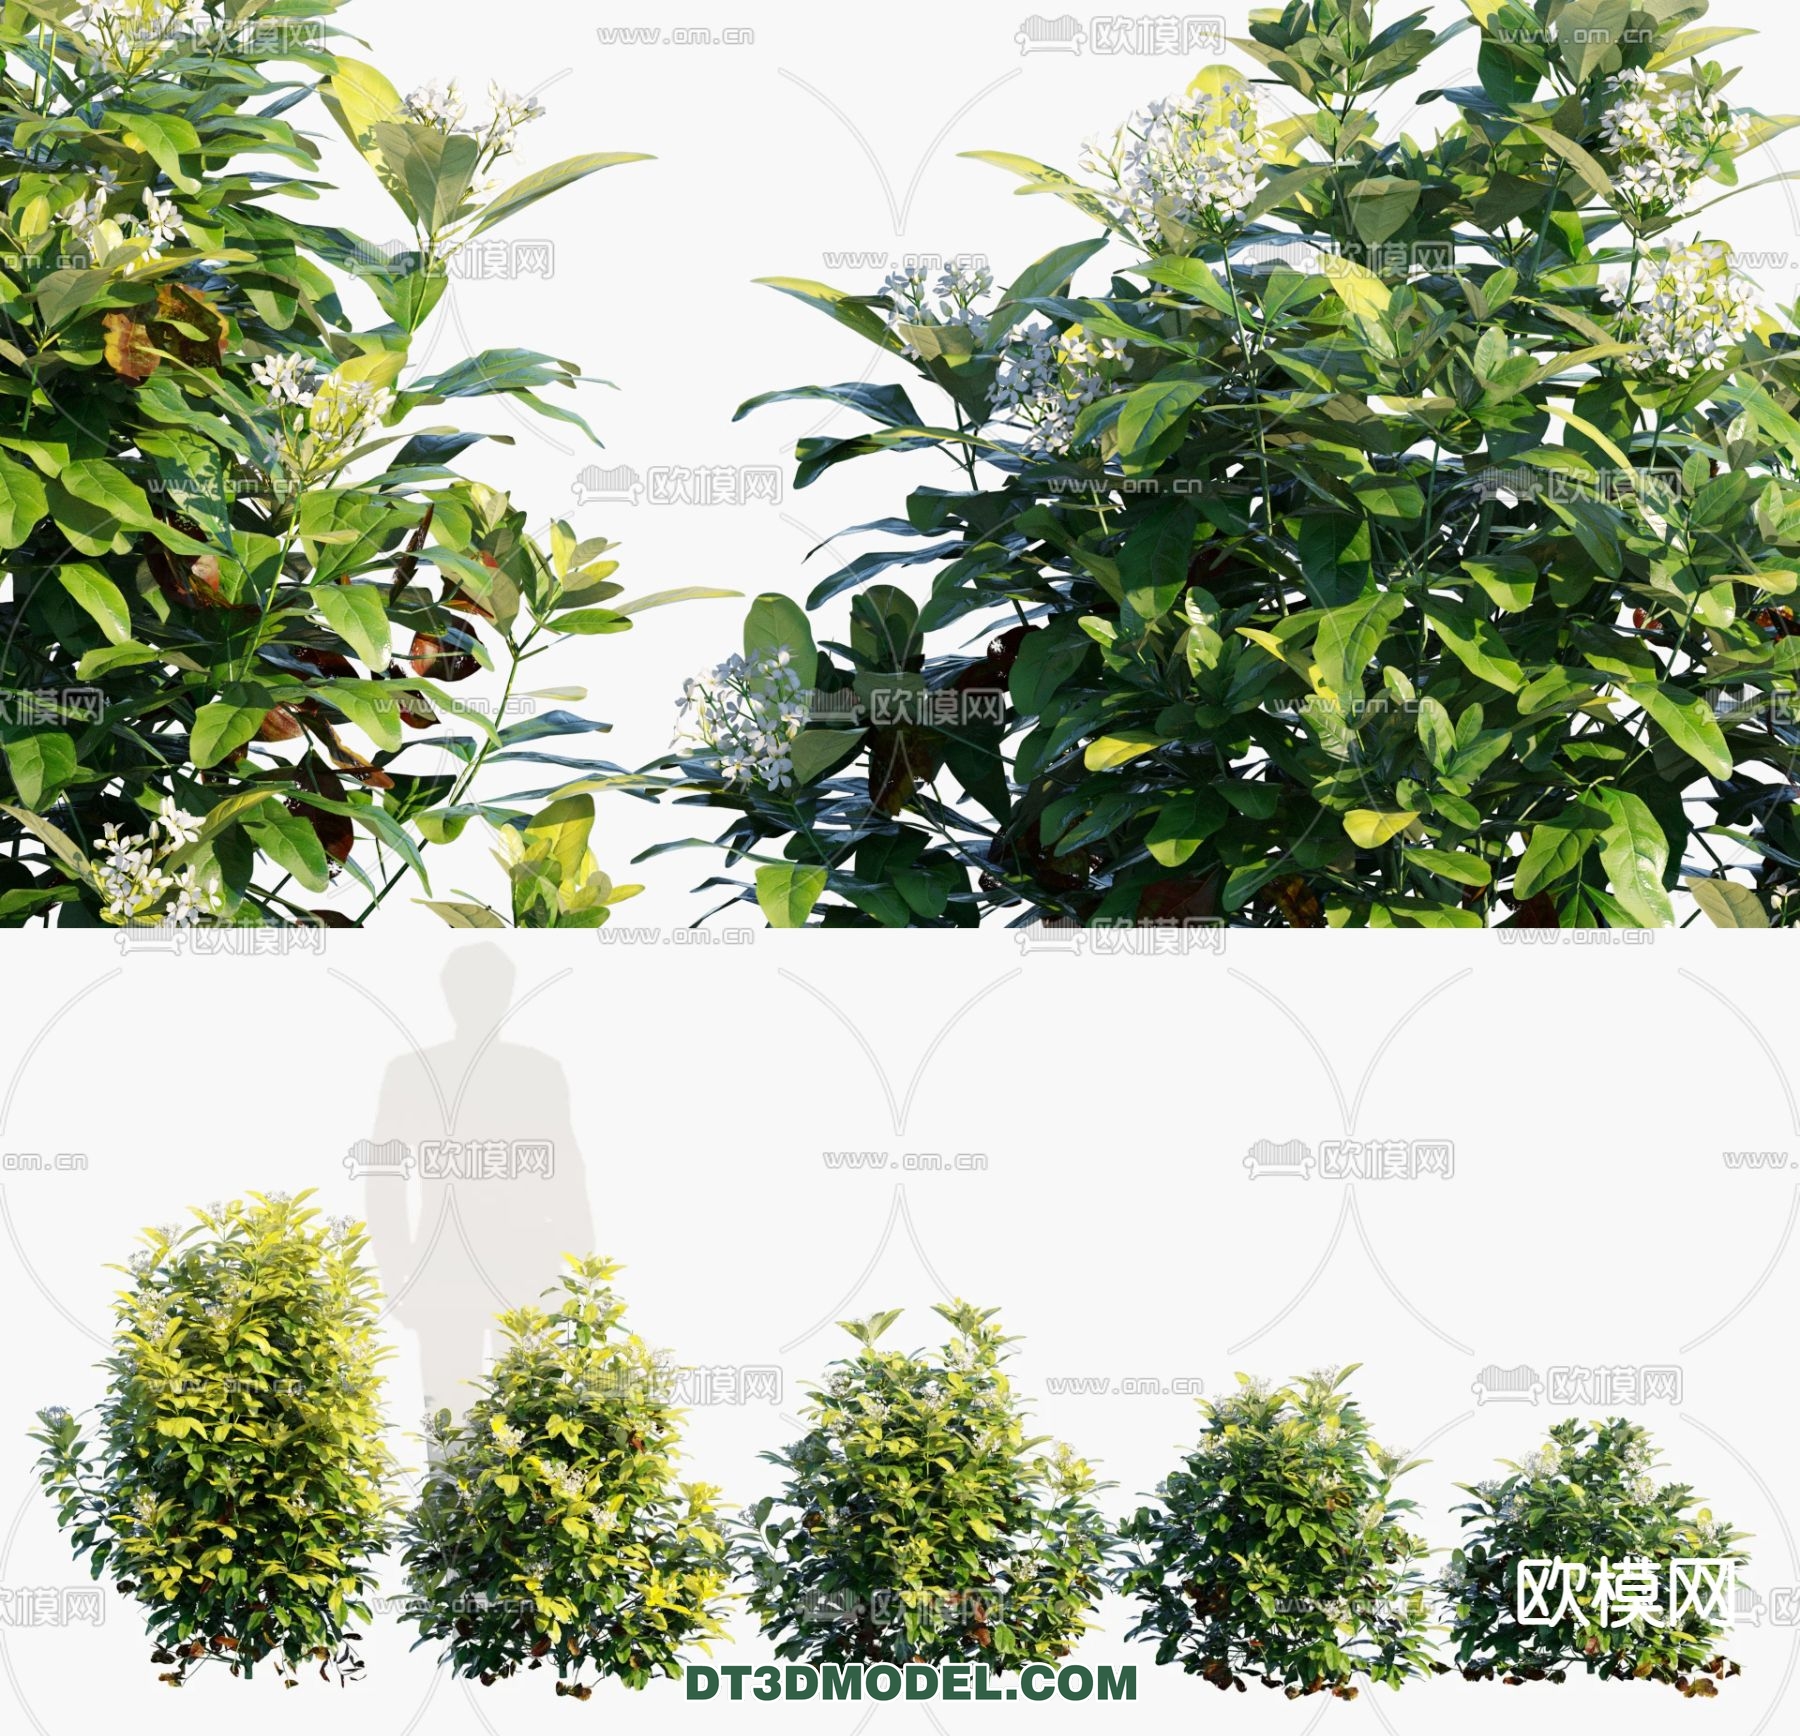 PLANTS – BUSH – VRAY / CORONA – 3D MODEL – 341 - thumbnail 1